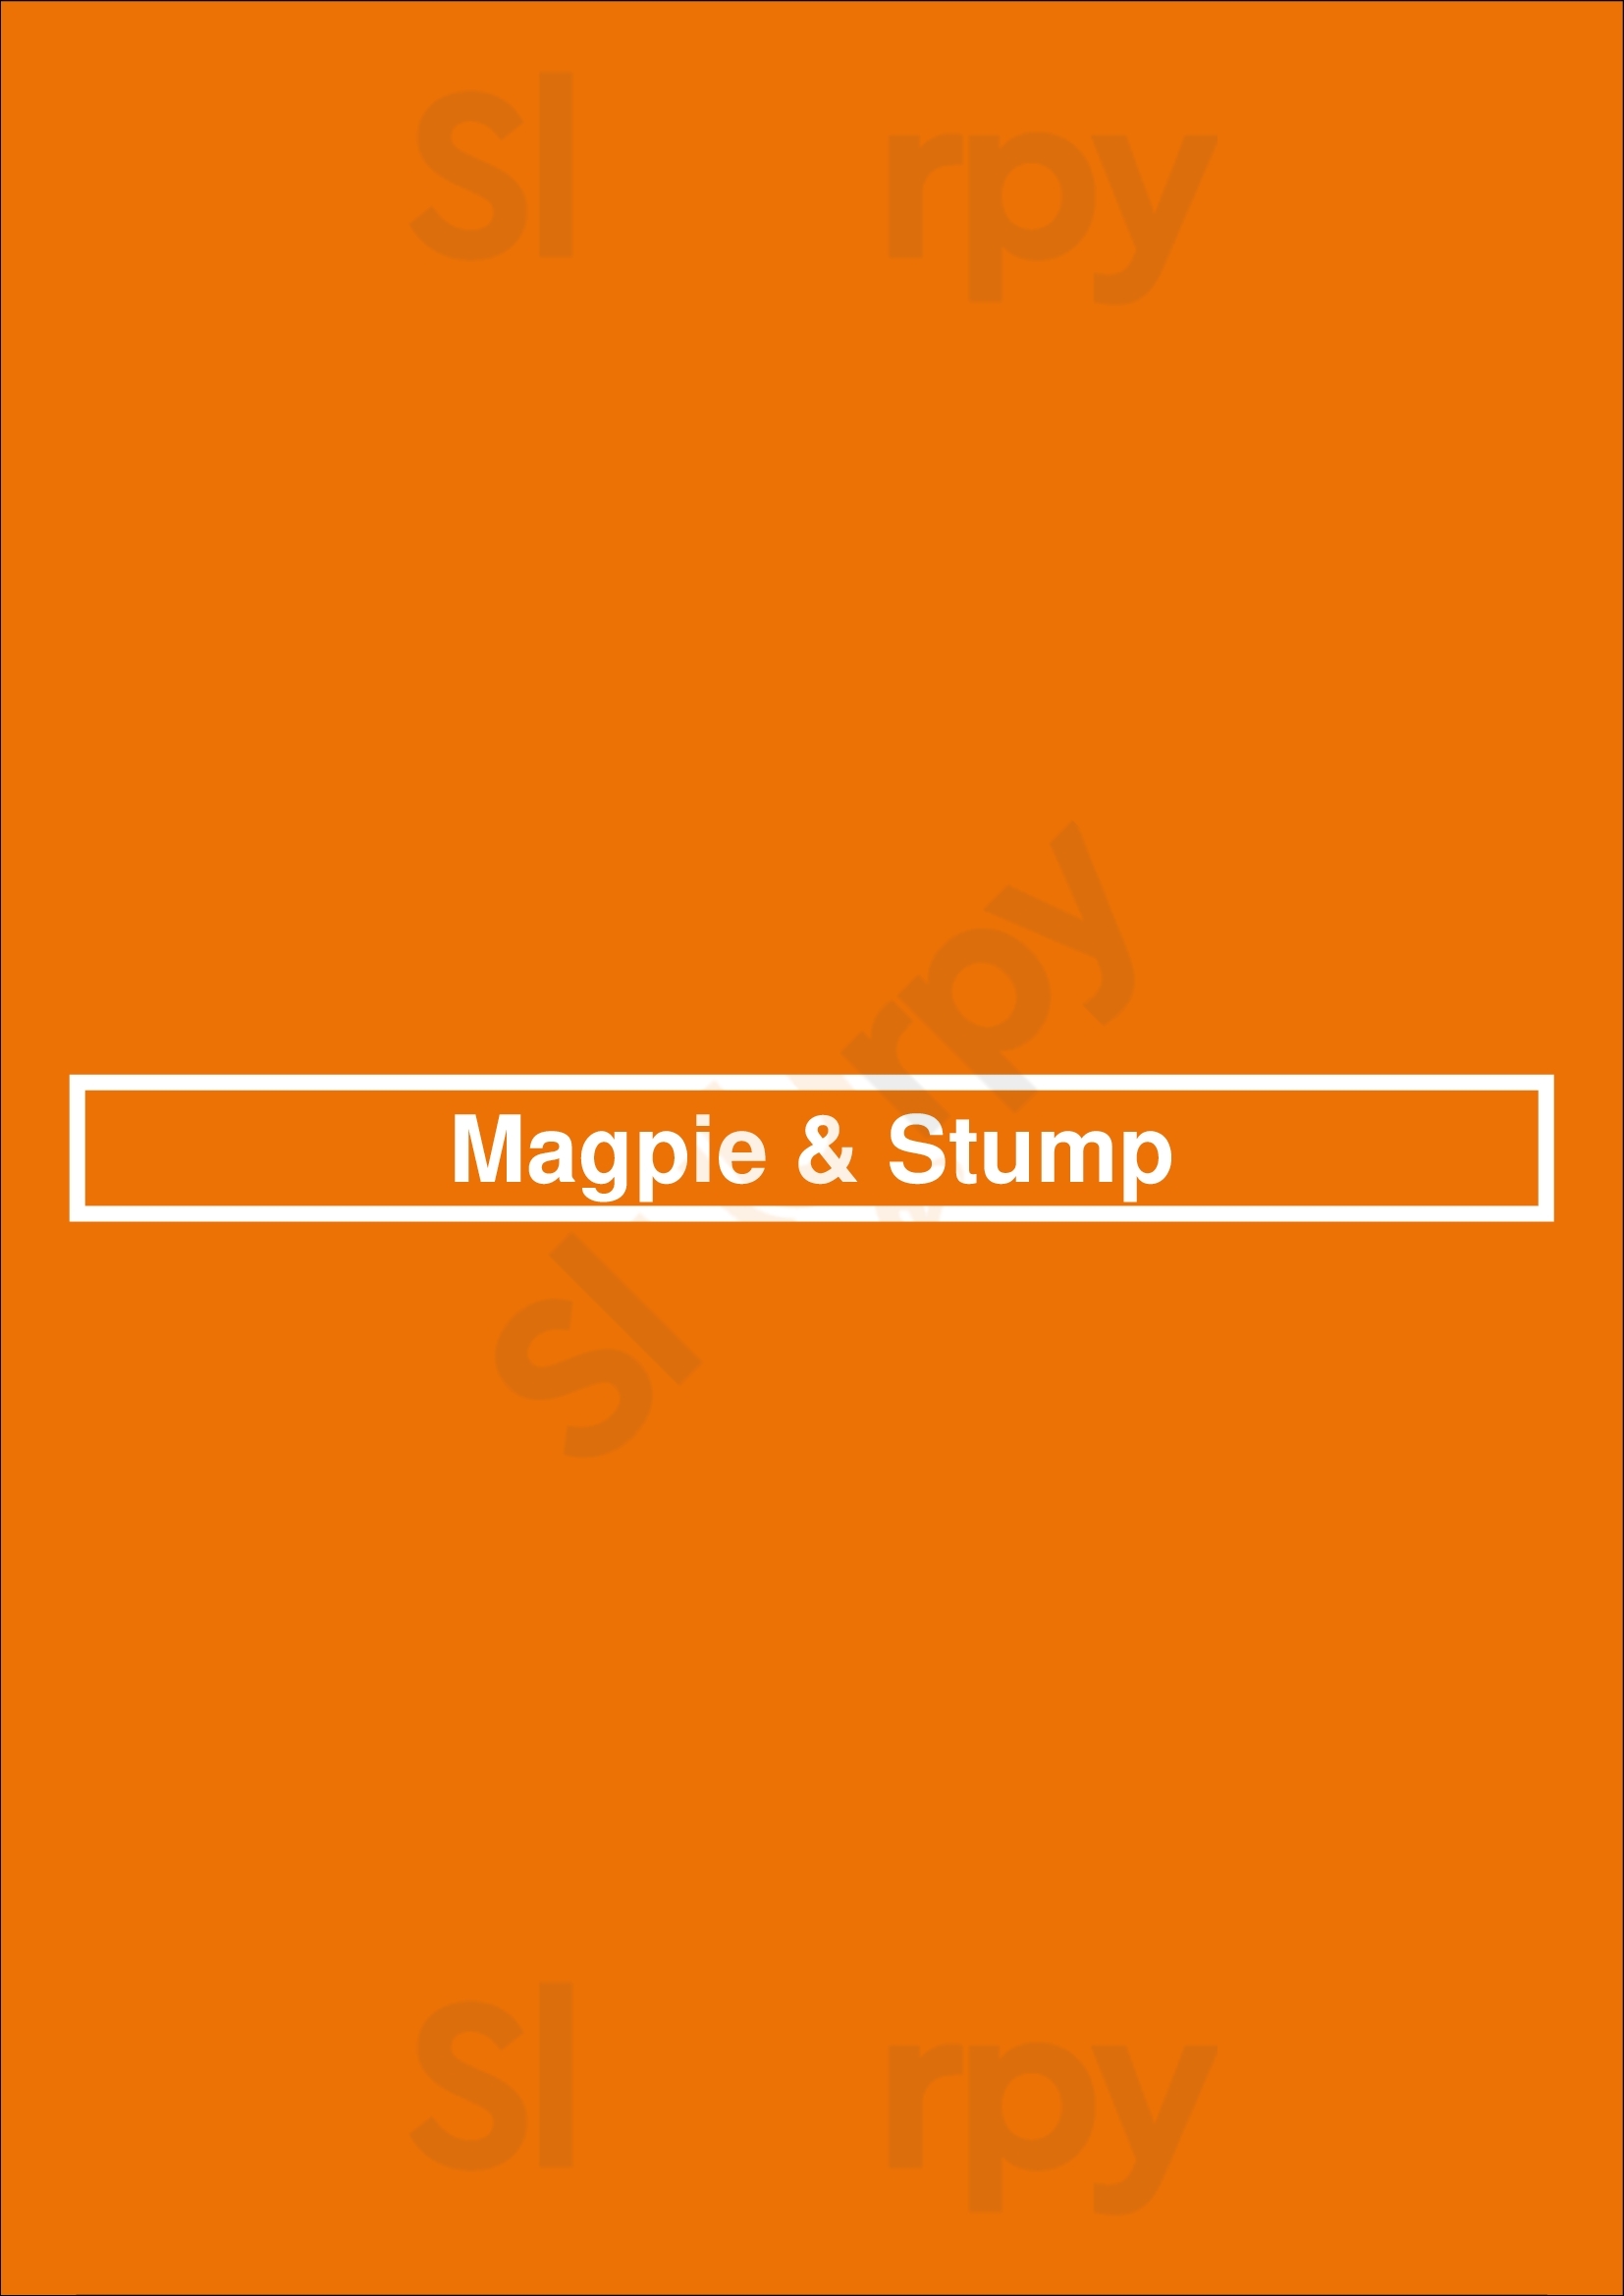 Magpie & Stump + El Patio Banff Menu - 1